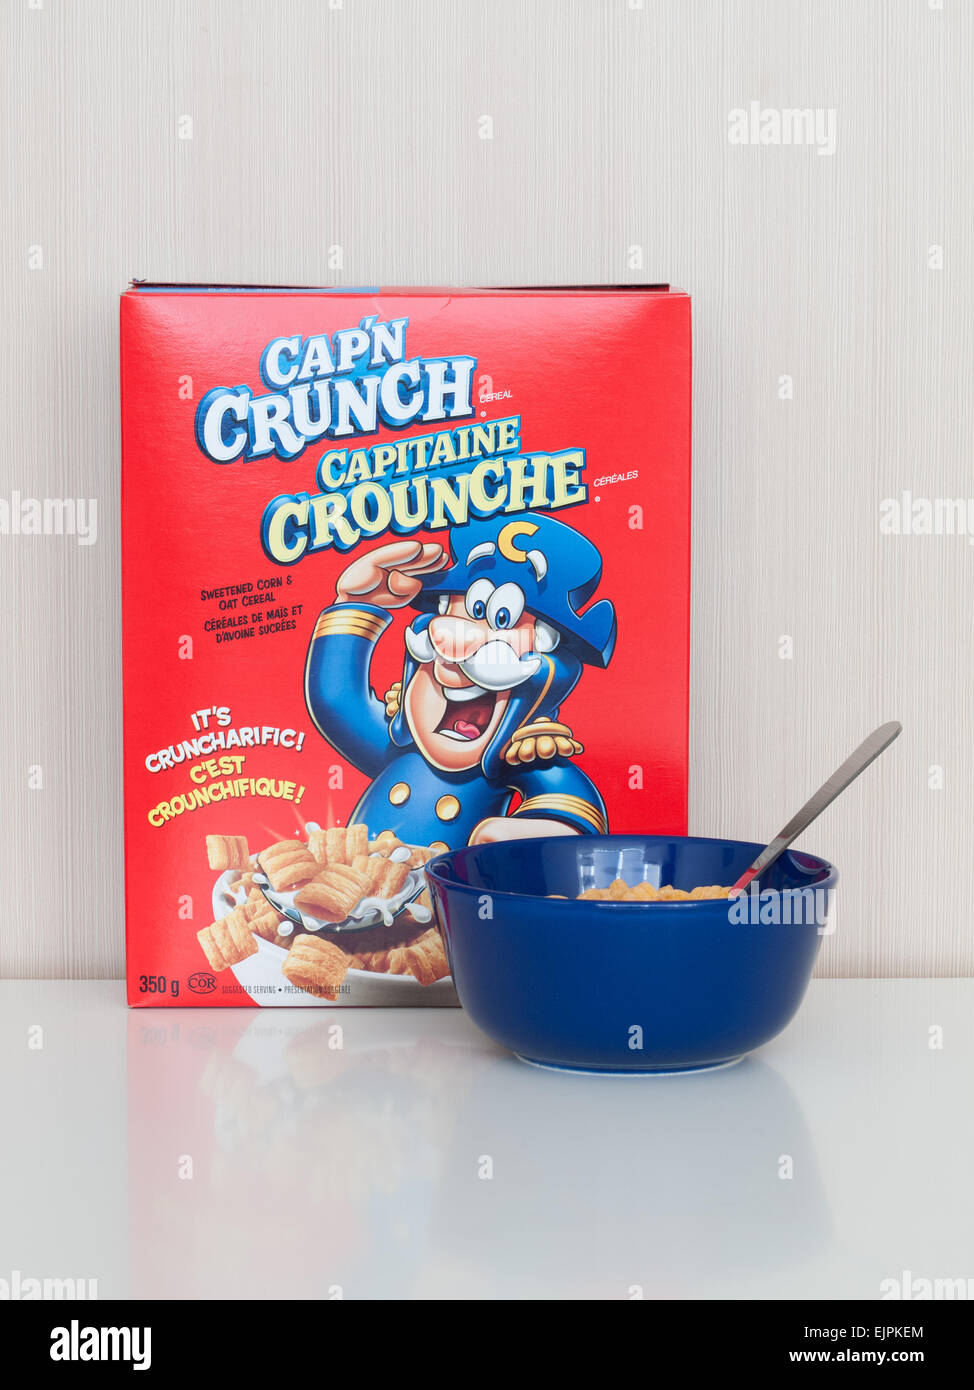 What is Cap'n Crunch's full name?